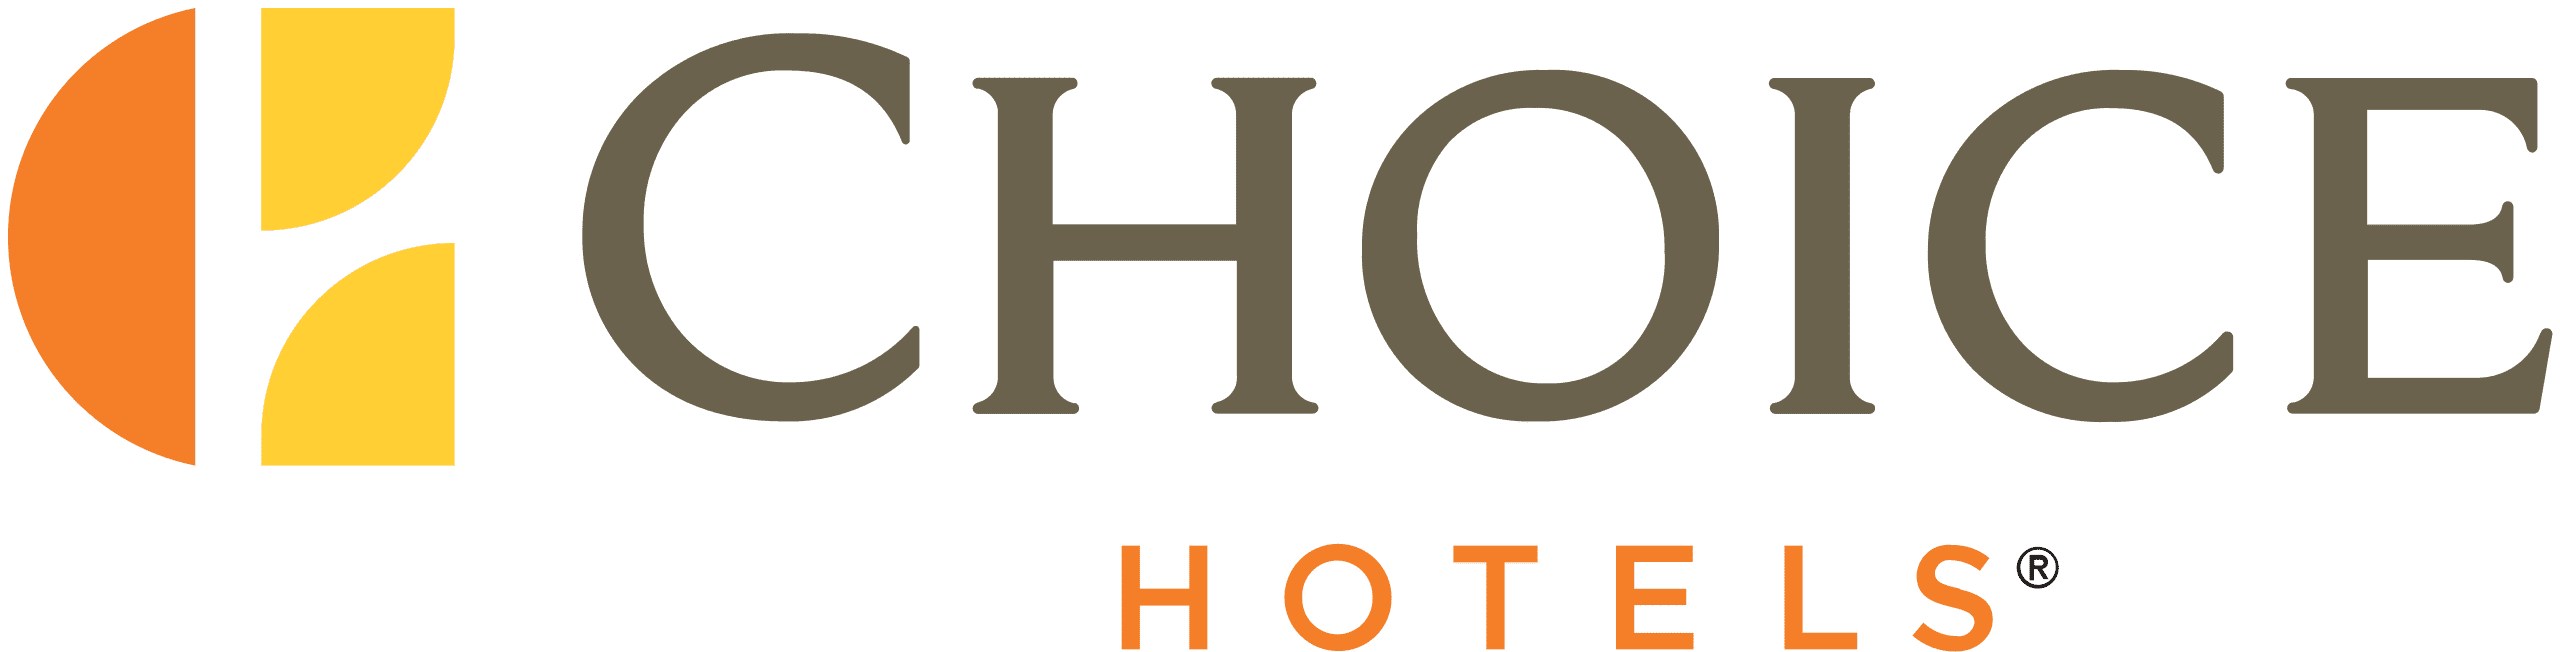 Choice Hotels logo.svg